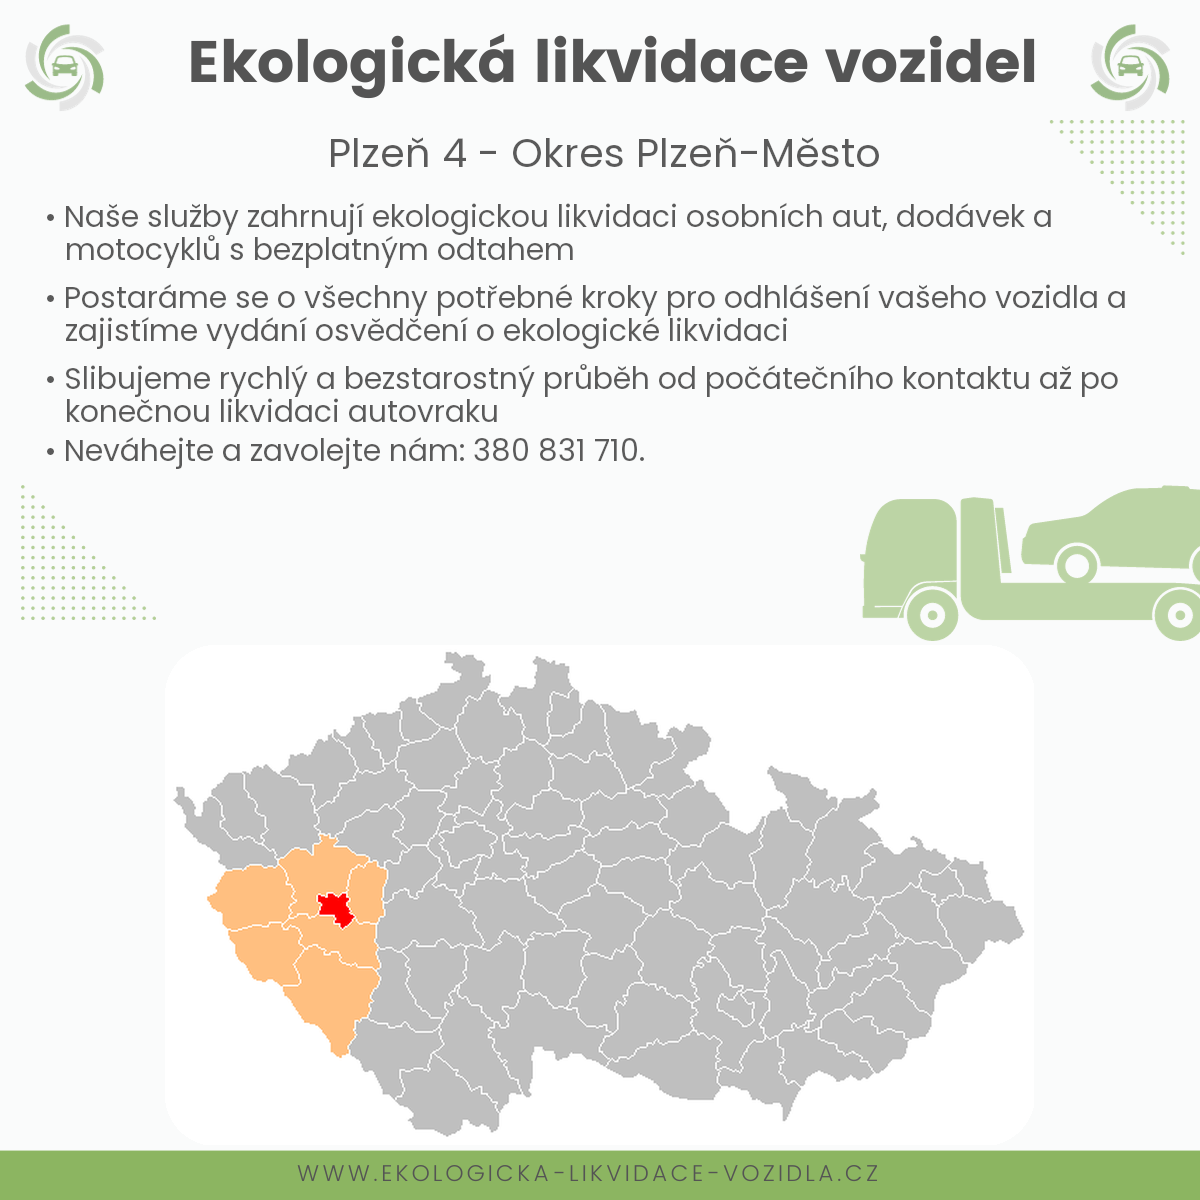 likvidace vozidel - Plzeň 4